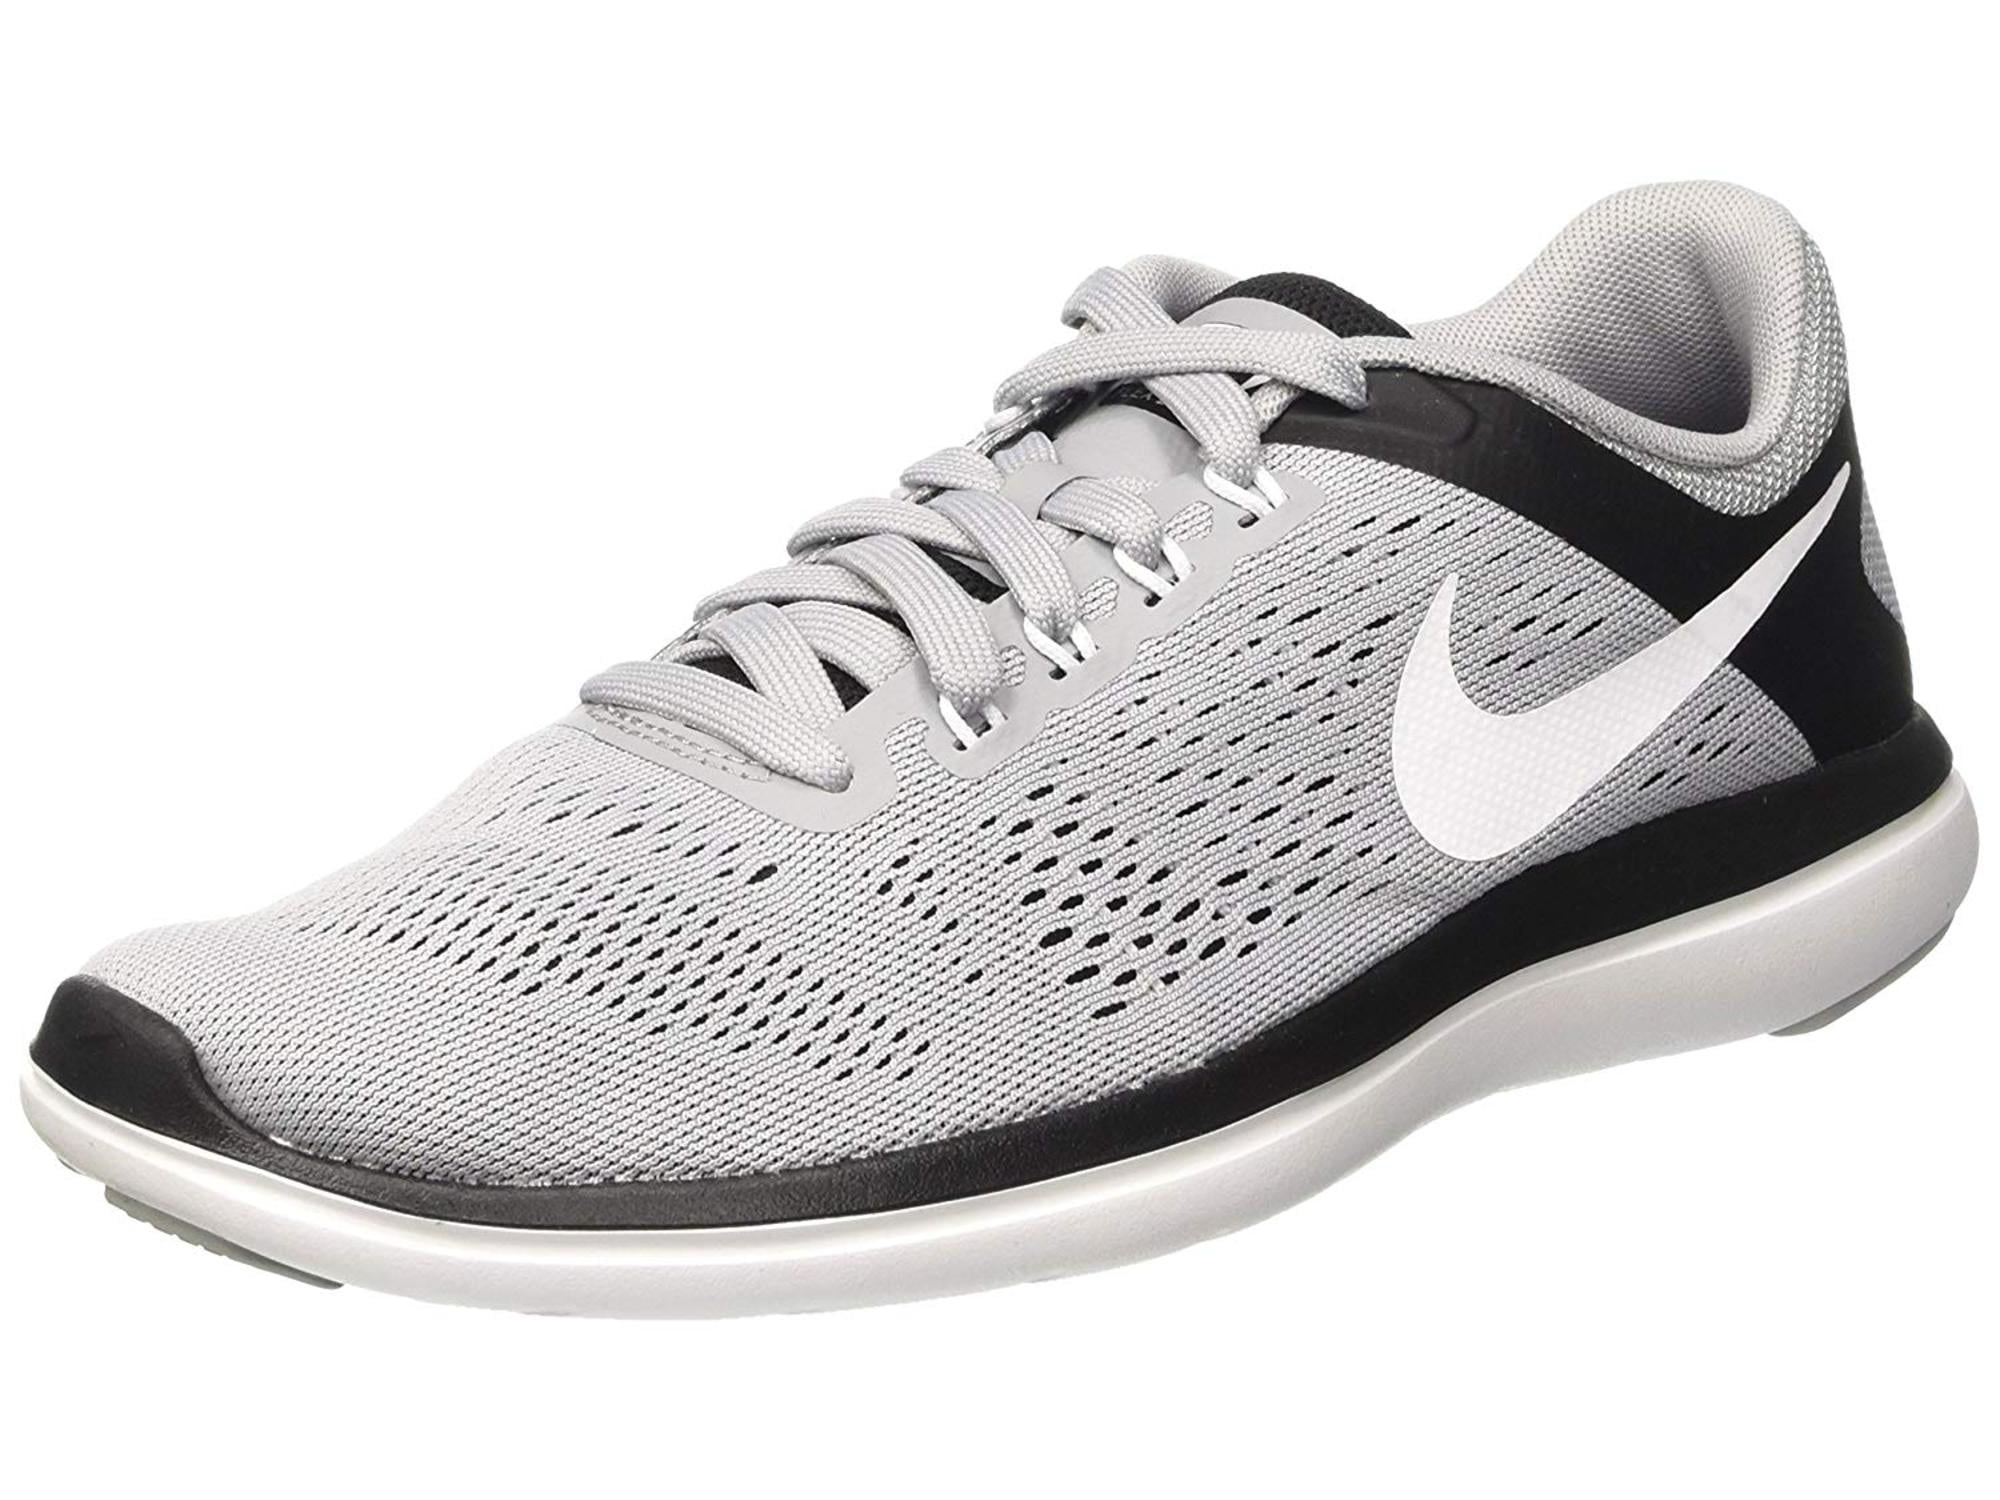 Nike Flex Experience Rn 5 Running Shoe - Walmart.com